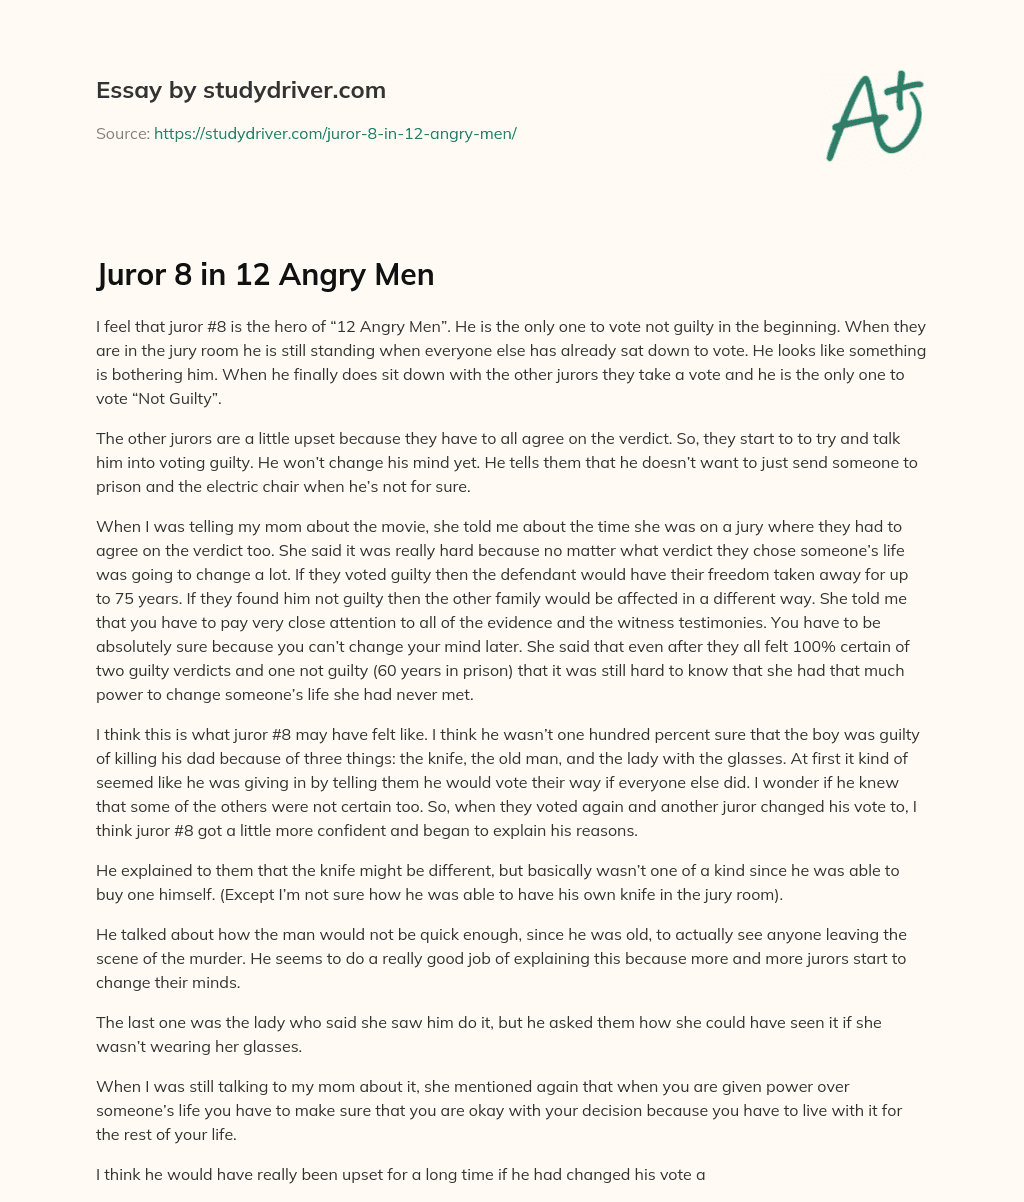 Juror 8 in 12 Angry Men essay